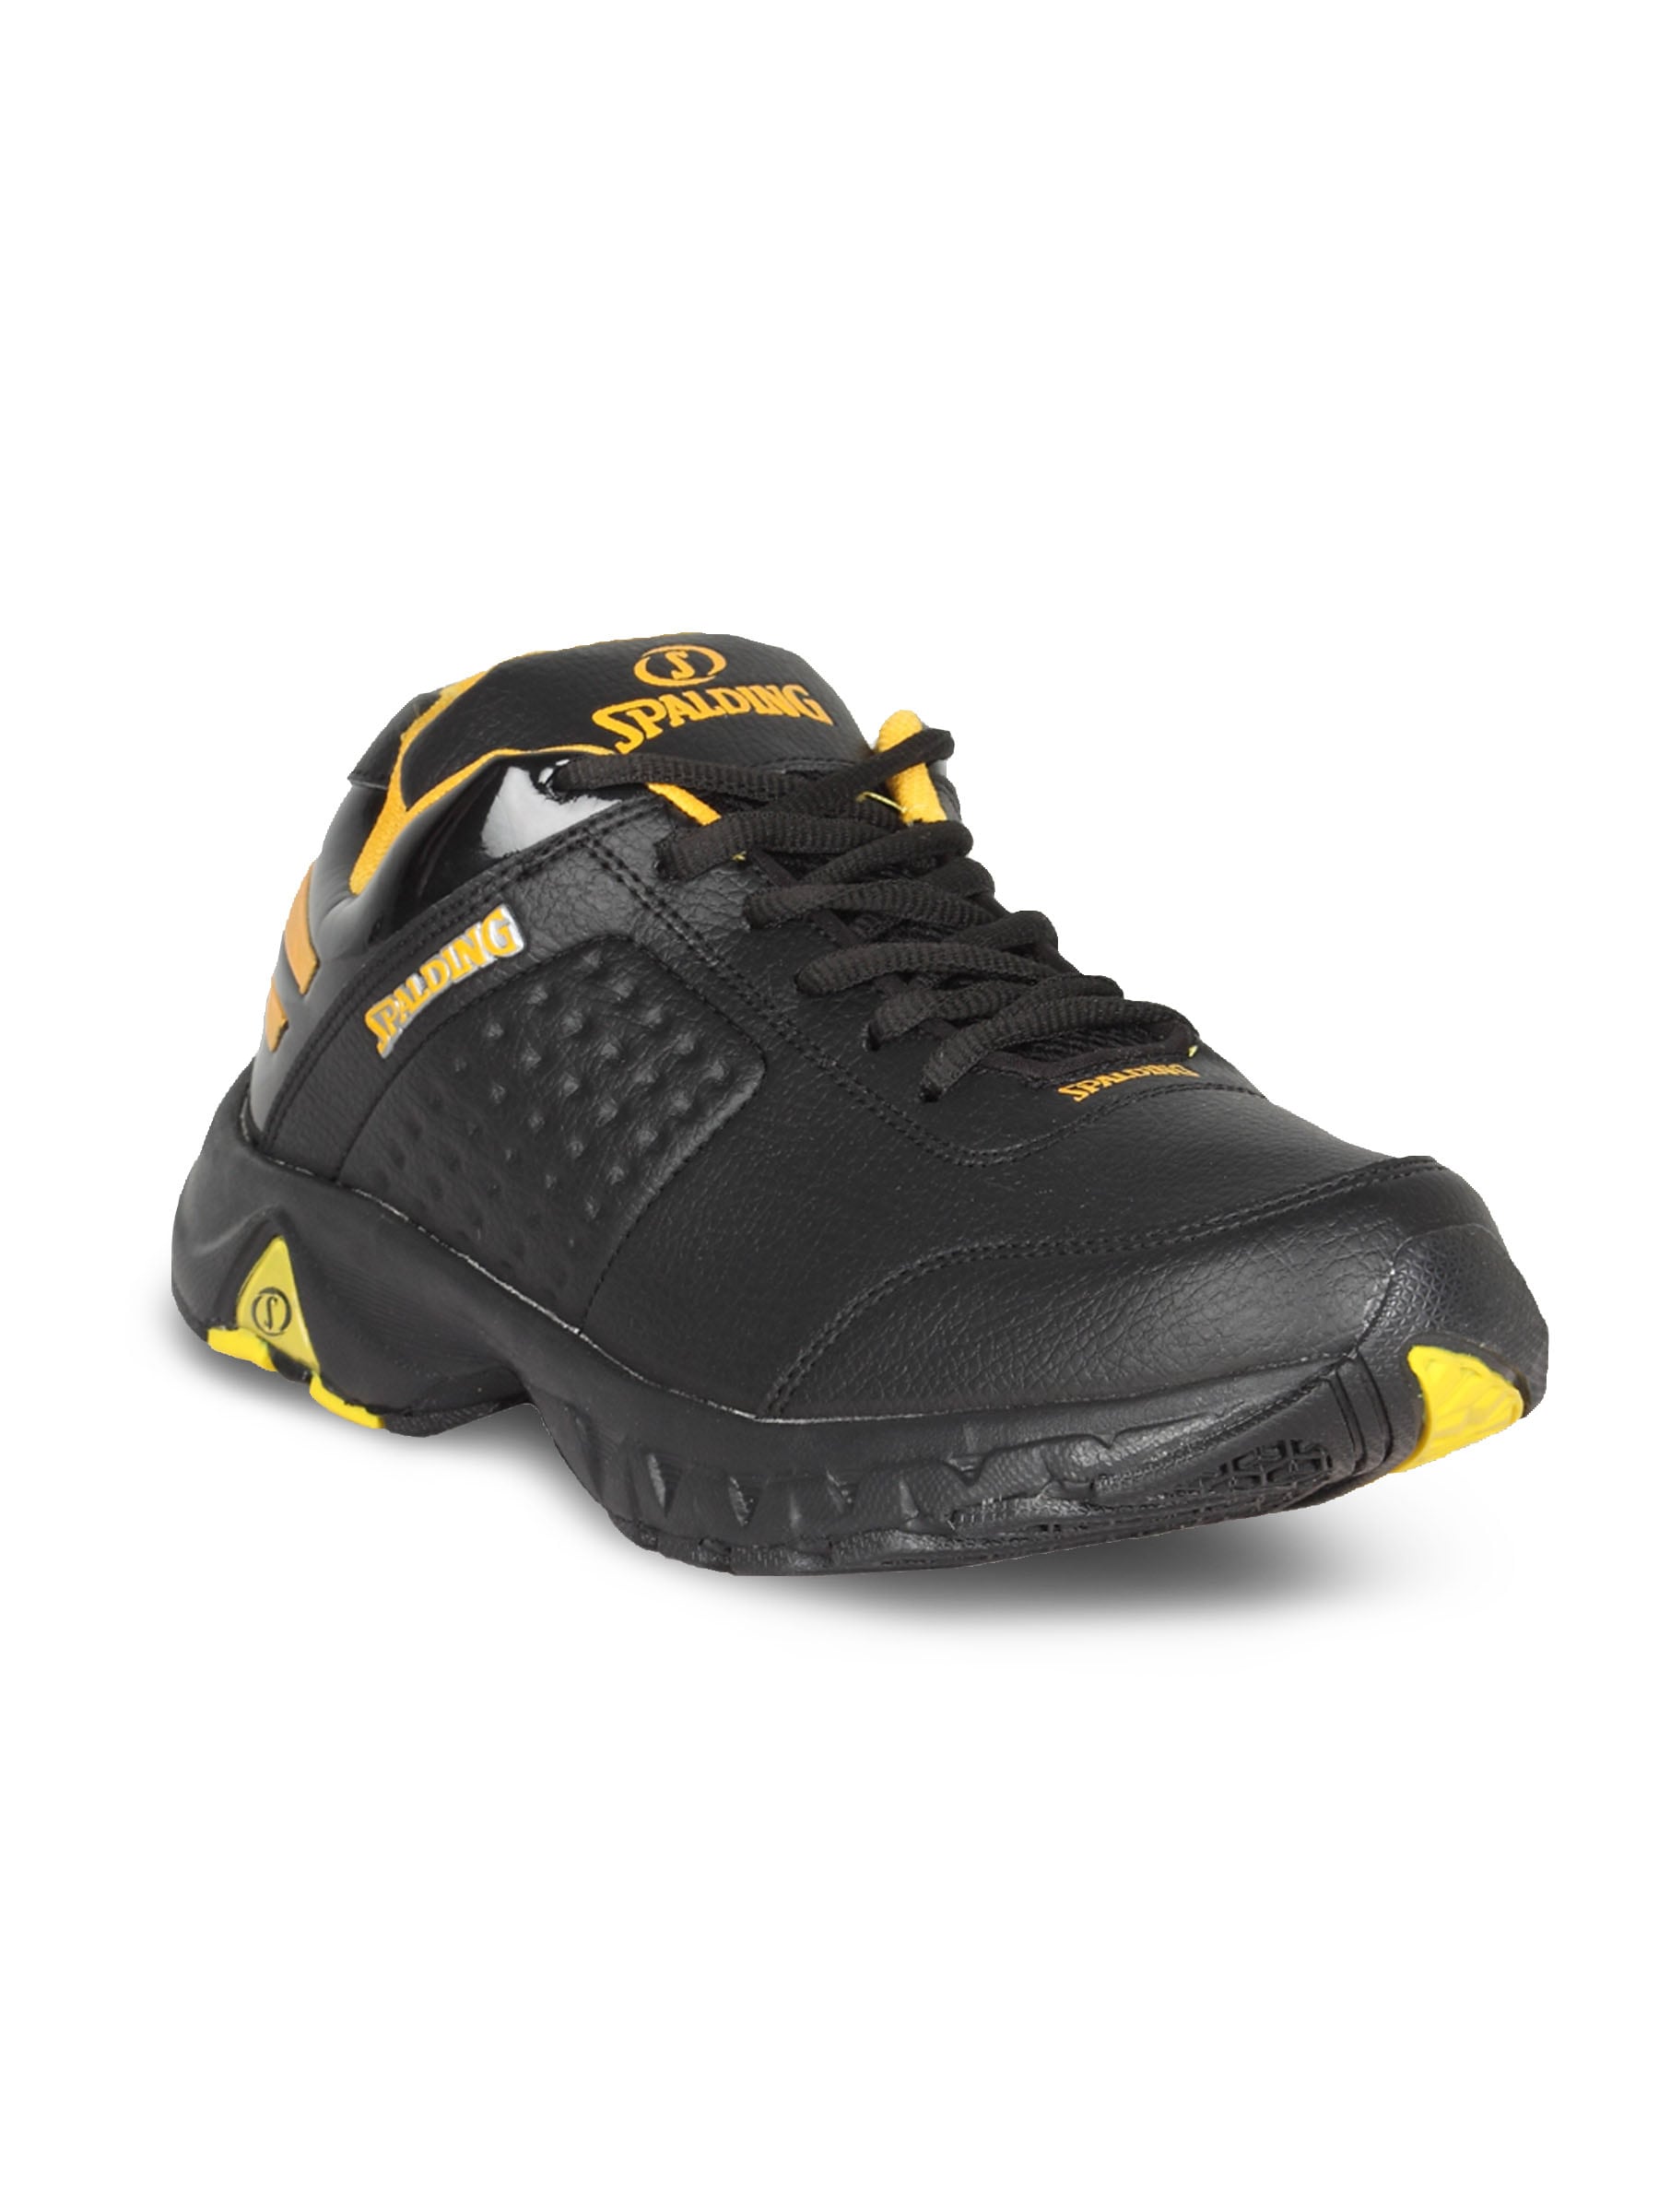 Spalding Men's Running Black Yellow Shoe